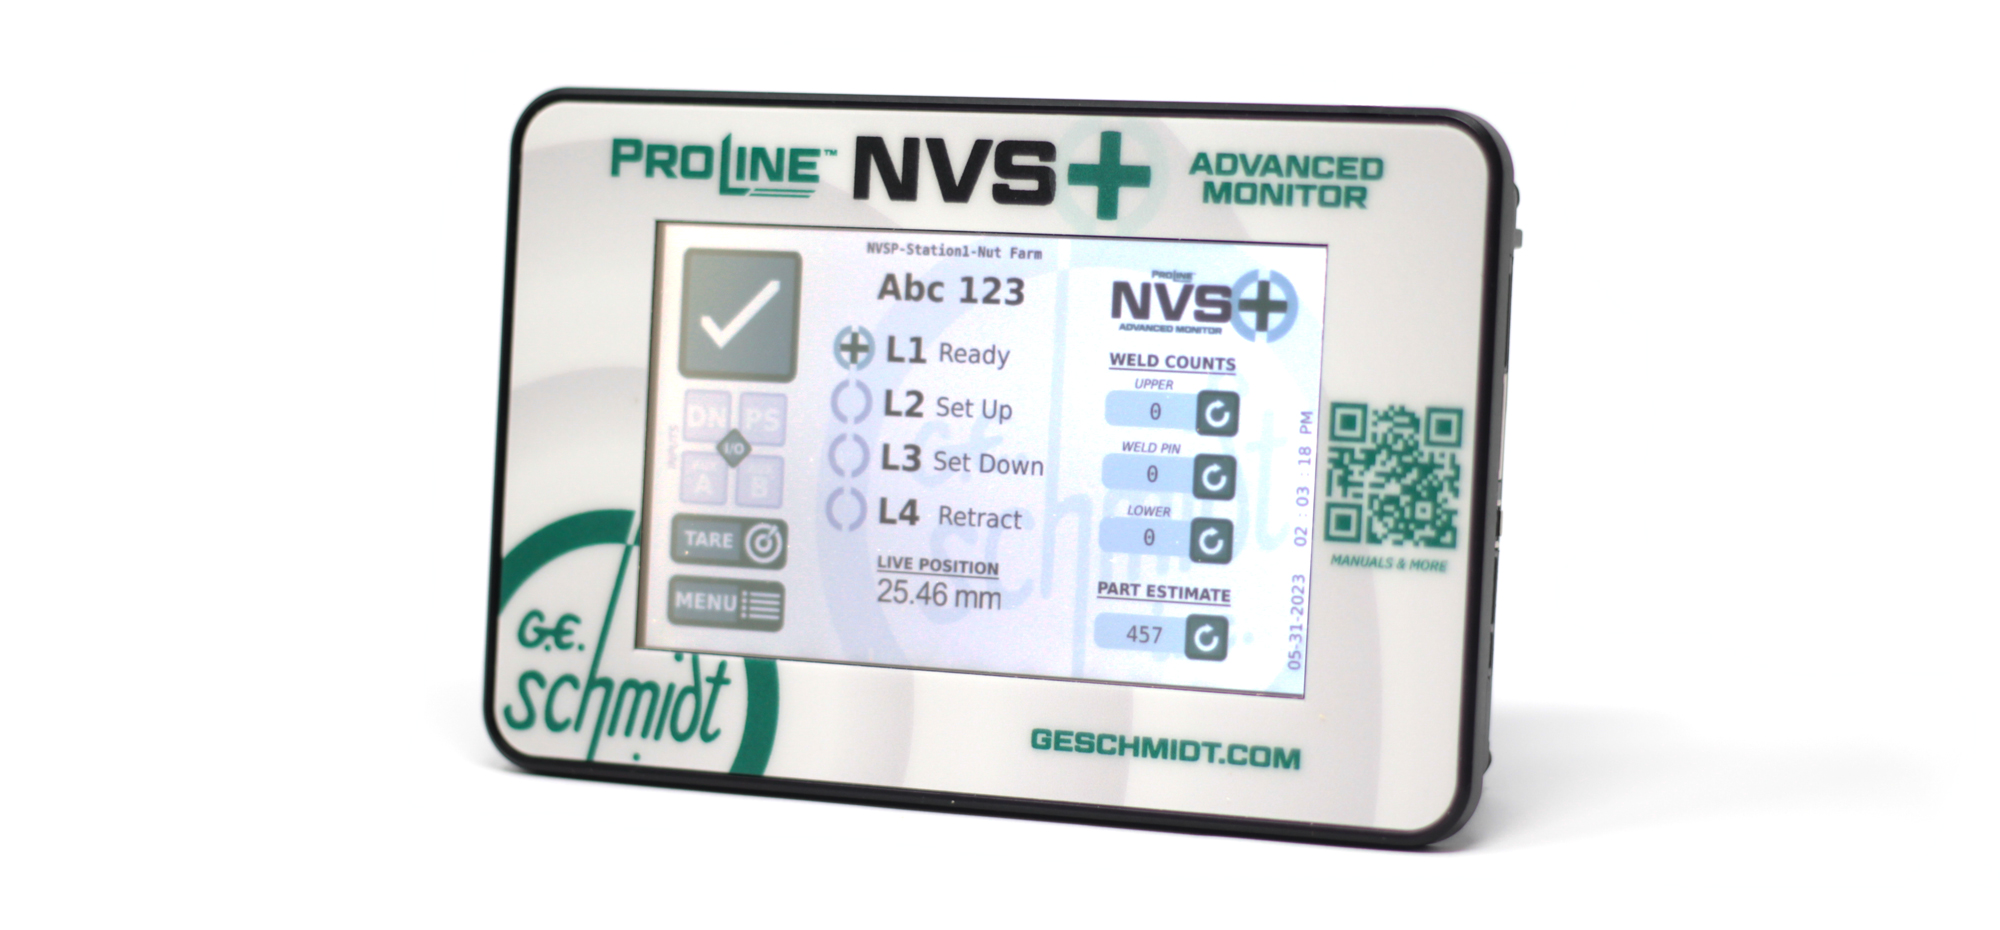 G.E. Schmidt ProLine NVS+ Advanced Monitor meter